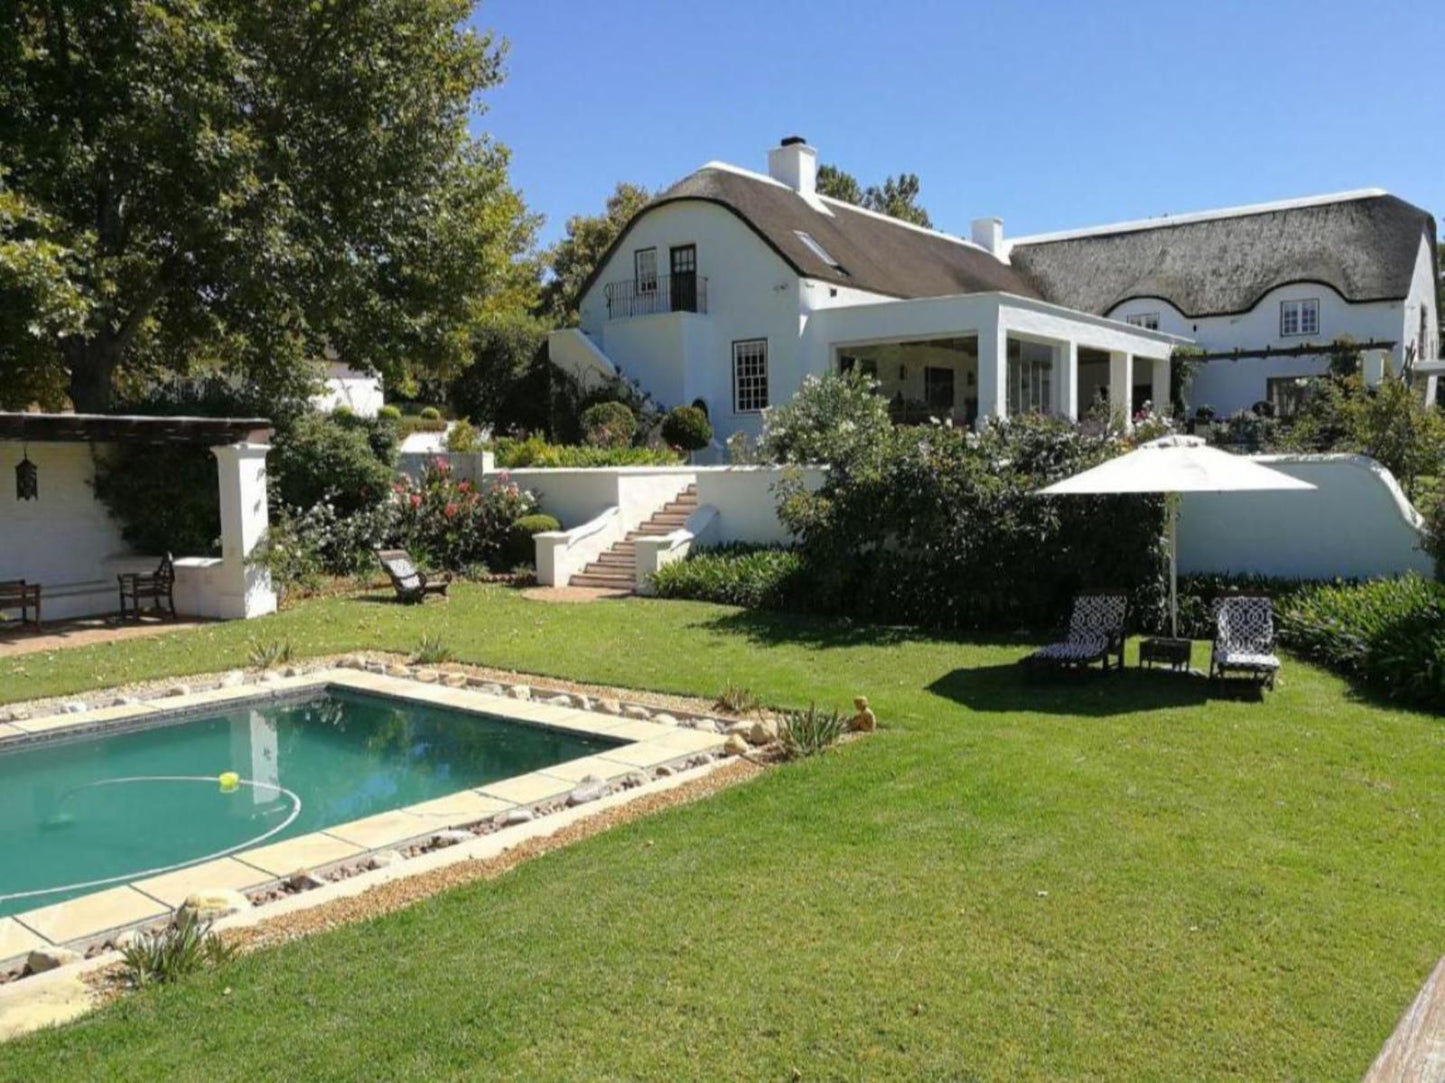 Gemoedsrus Farm Stellenbosch Western Cape South Africa House, Building, Architecture, Garden, Nature, Plant, Swimming Pool